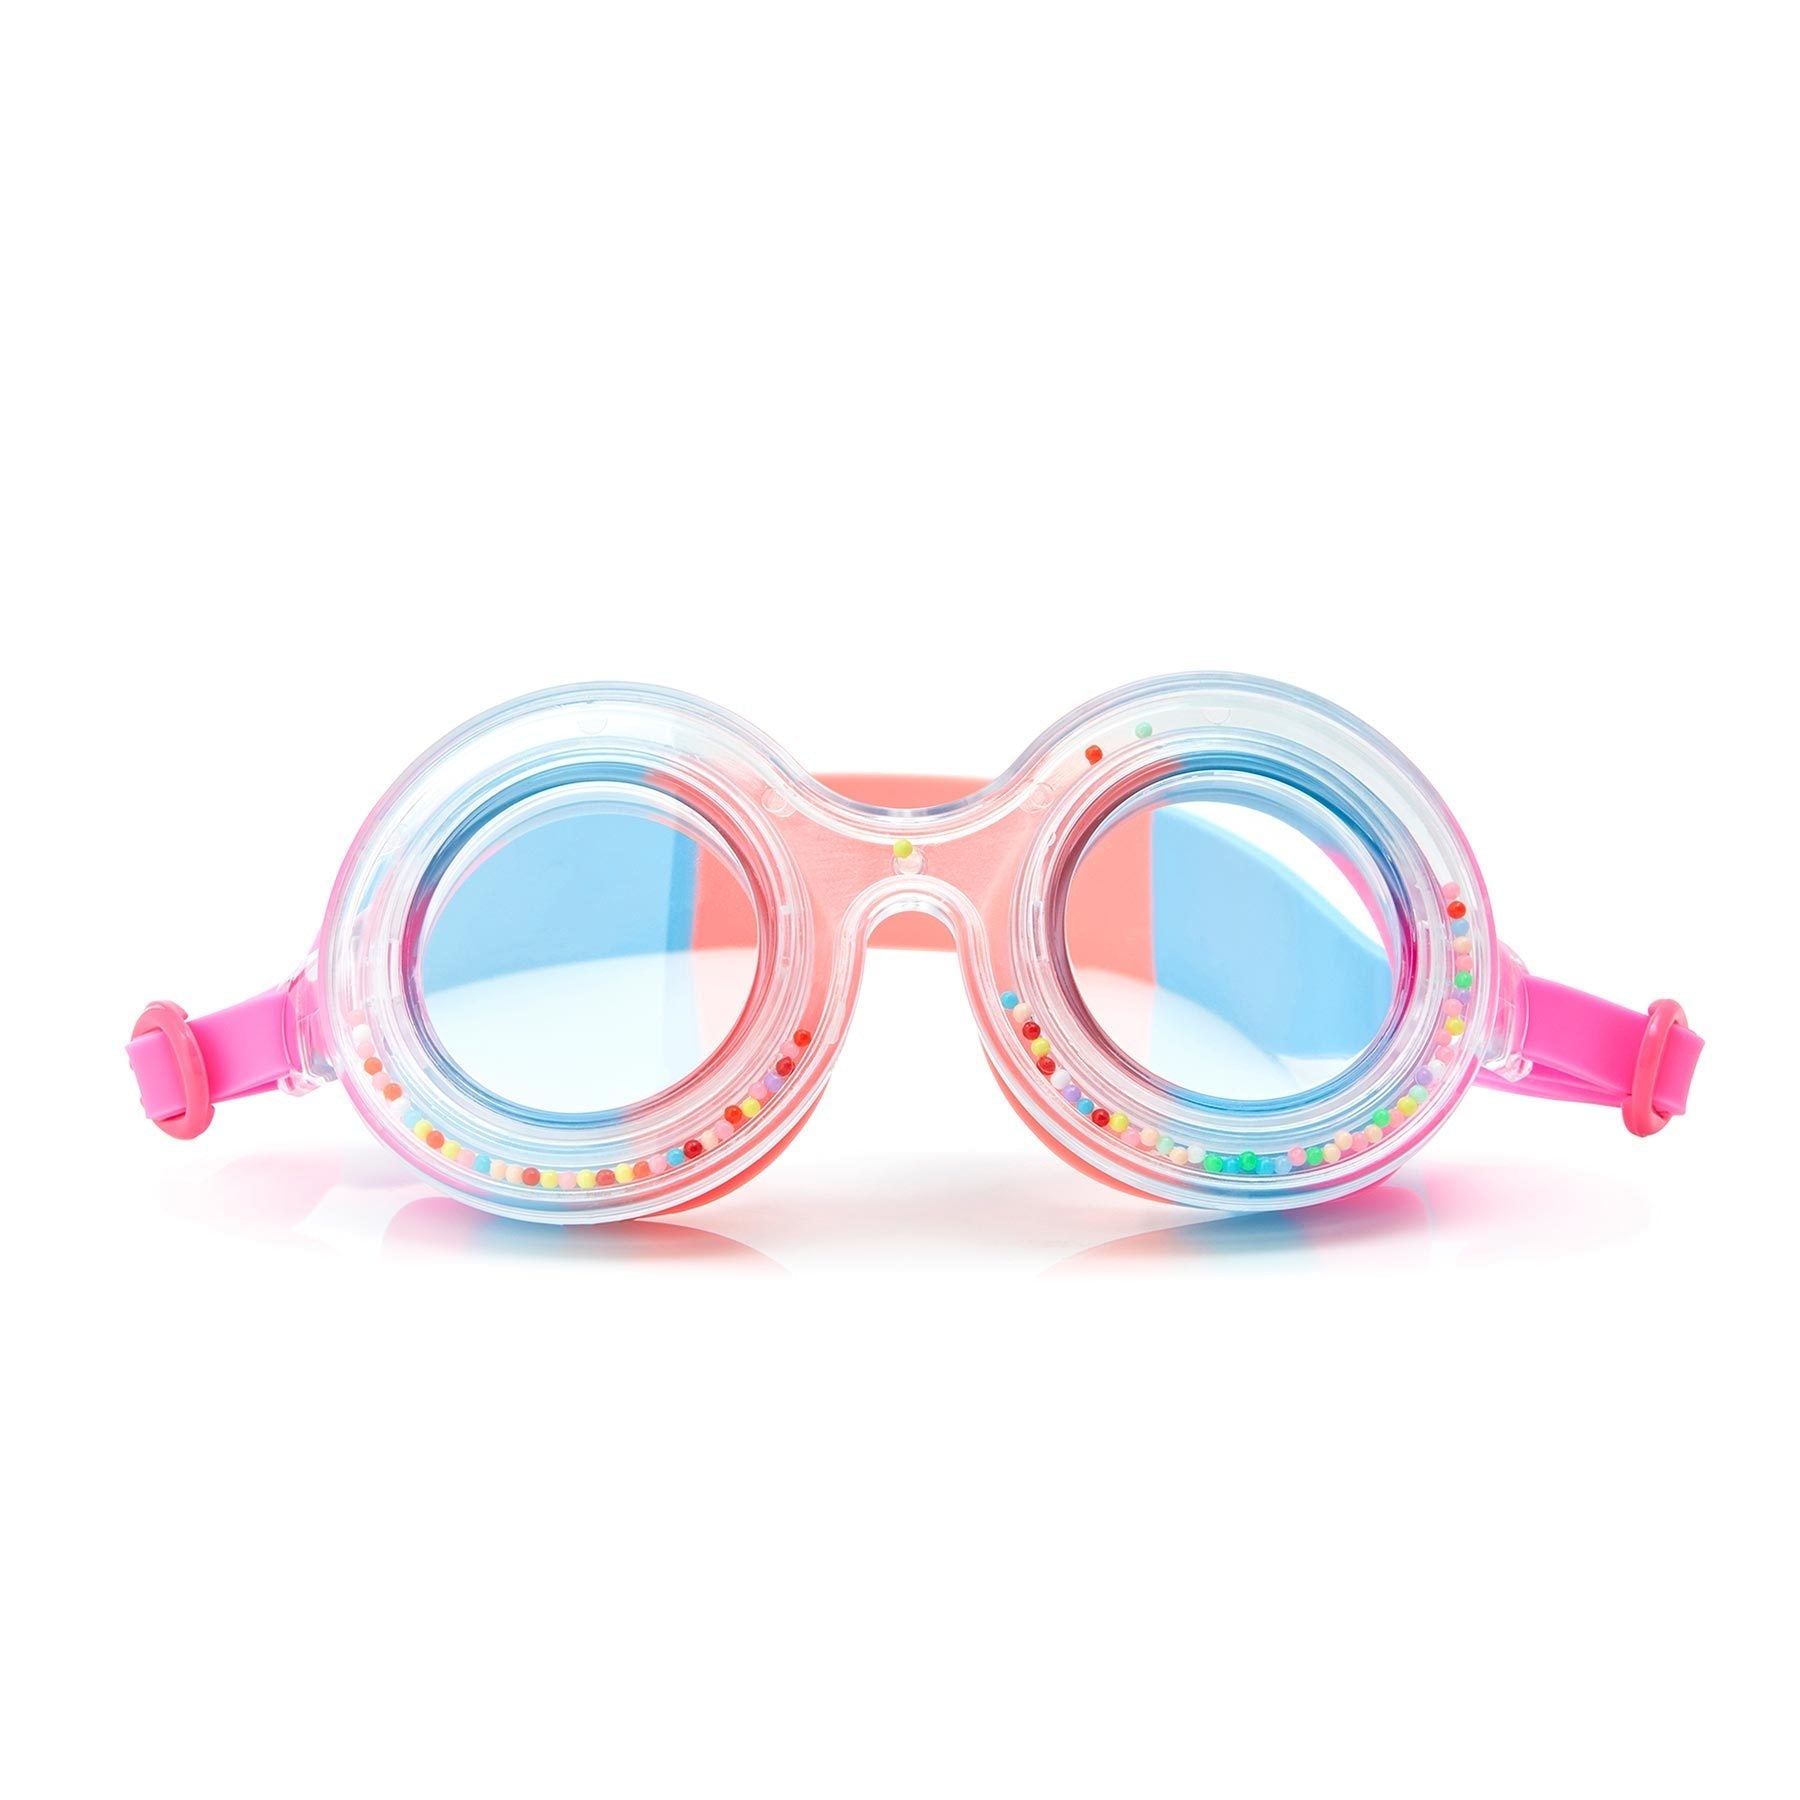 Bling2o Bubble-icious Yummy Gummy Swim Goggles